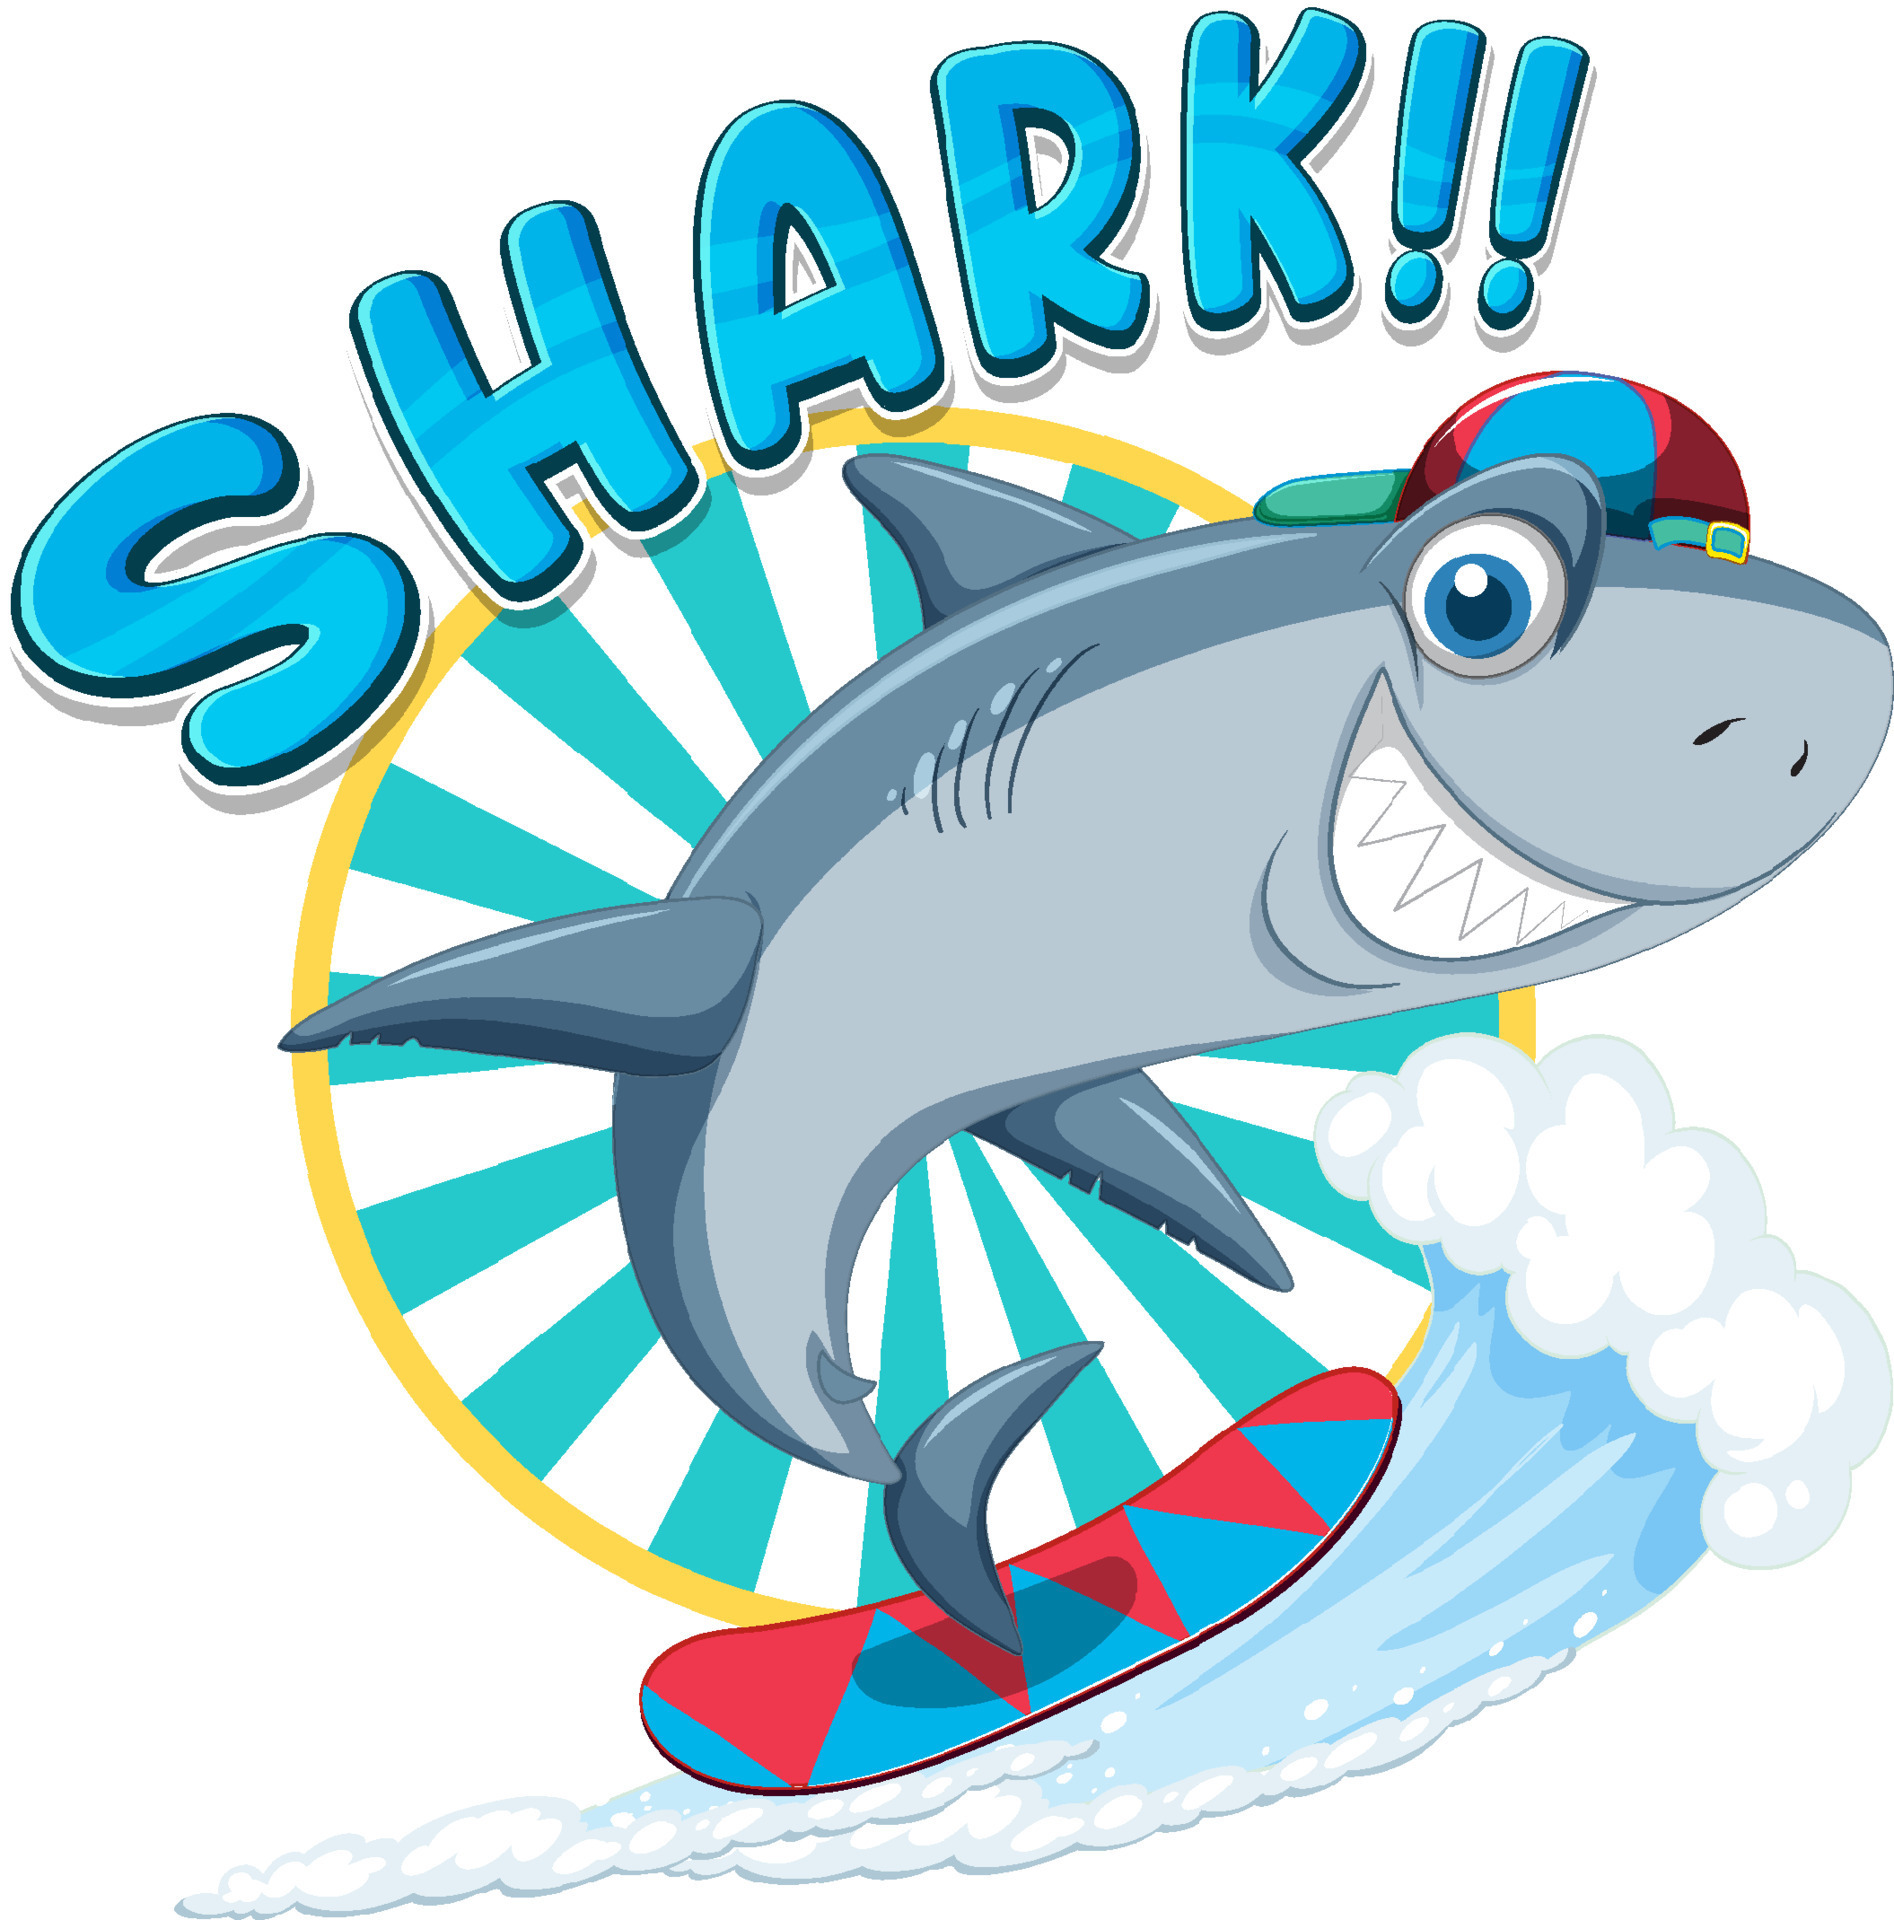 14856 Shark Wallpaper Images Stock Photos  Vectors  Shutterstock